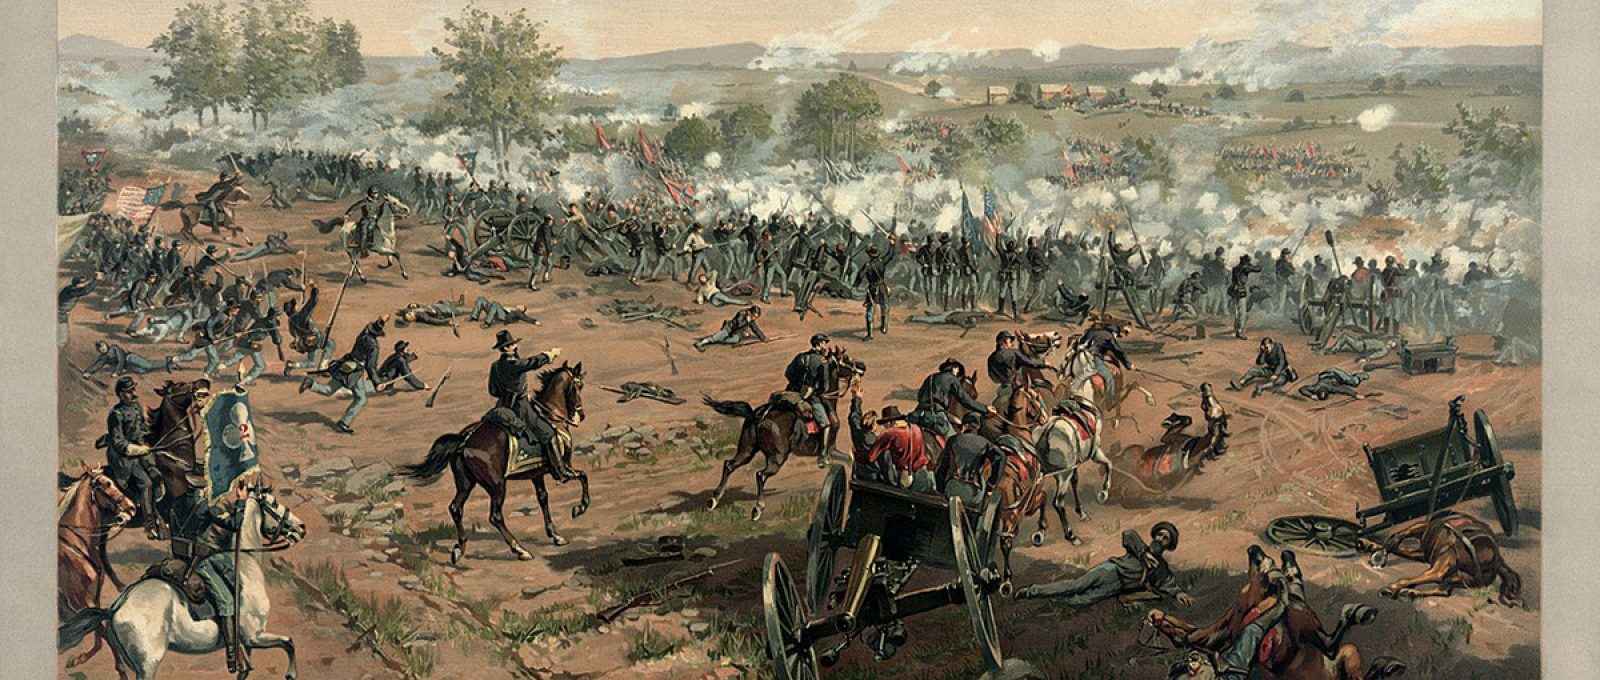 1280px-thure_de_thulstrup_-_l._prang_and_co._-_battle_of_gettysburg_-_restoration_by_adam_cuerden